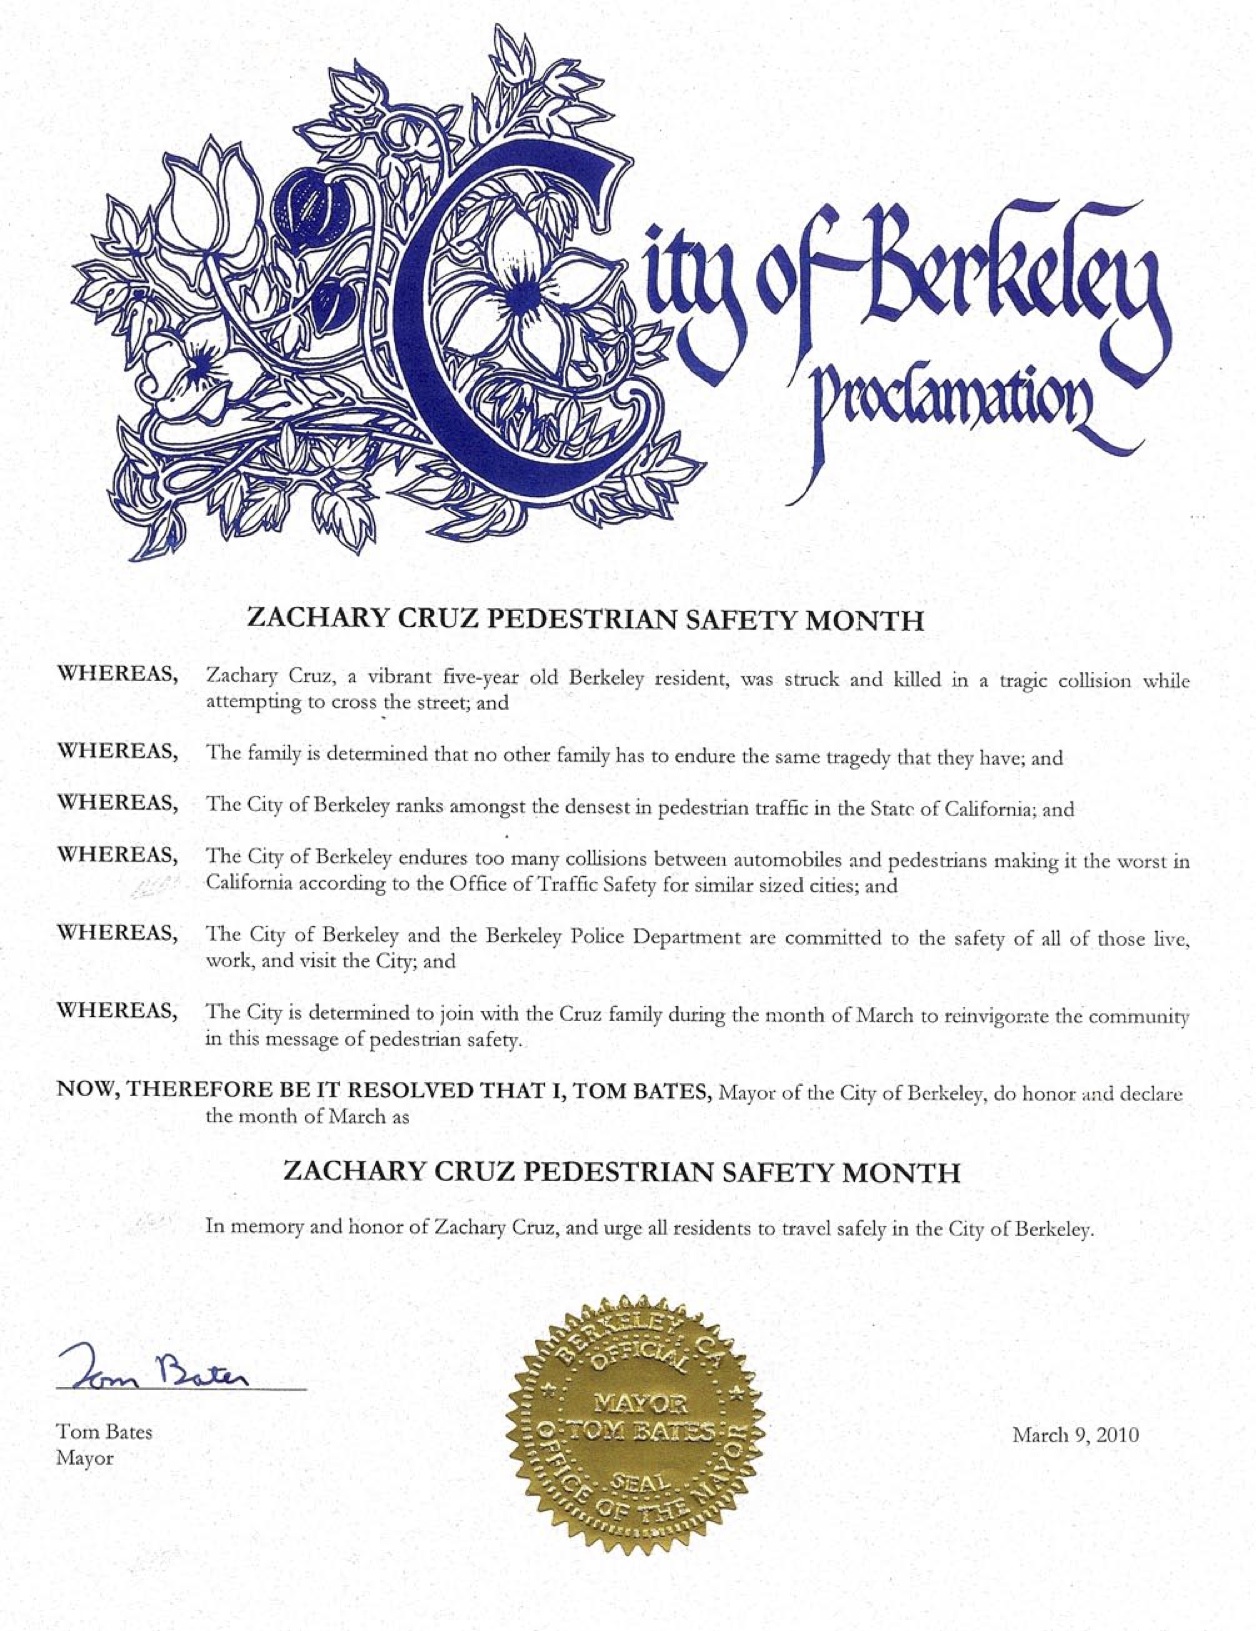 March Named Zachary Cruz Pedestrian Safety Month in Berkeley